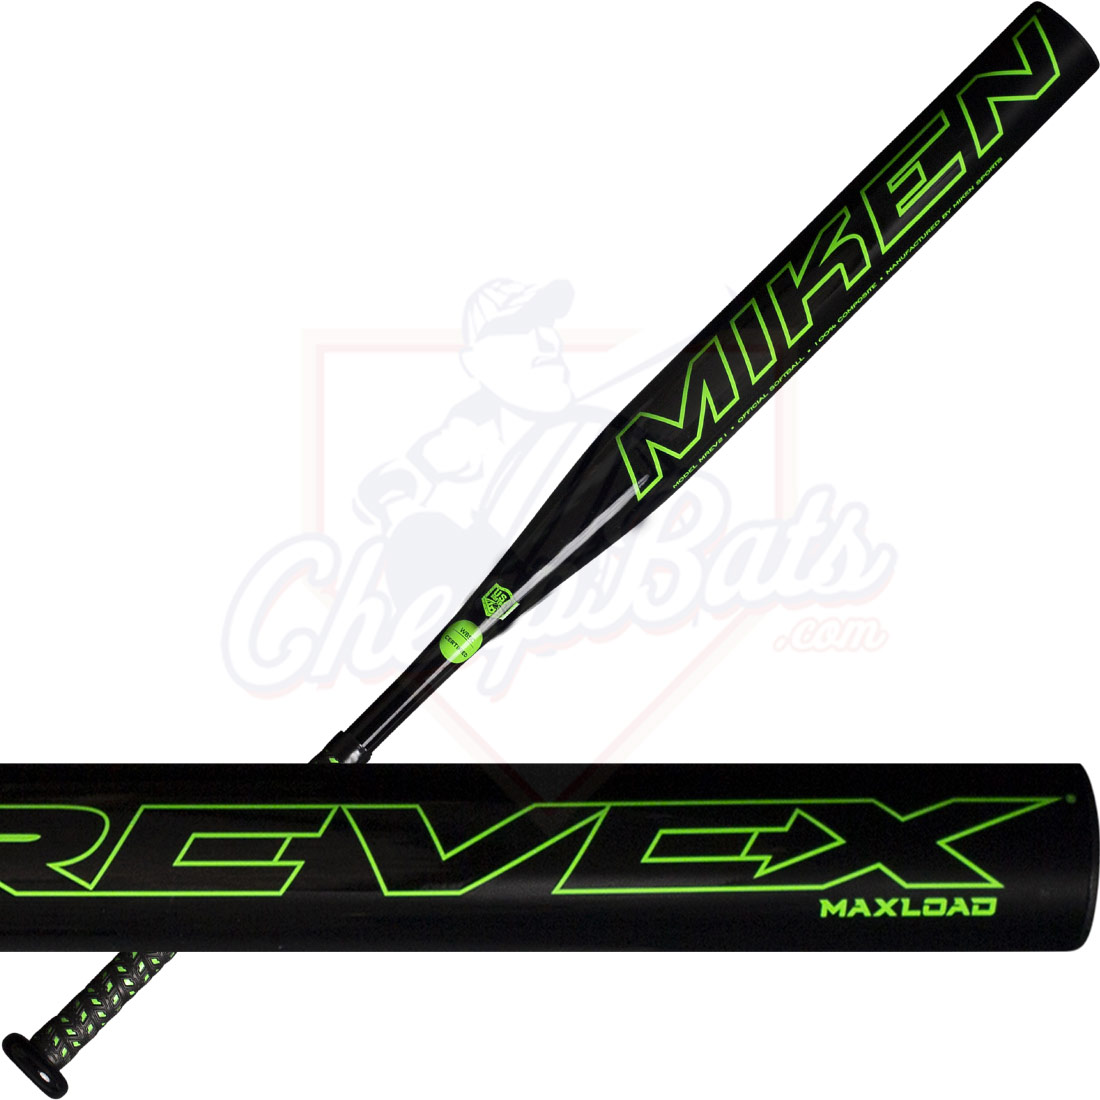 2021 Miken Rev-Ex Slowpitch Softball Bat Maxload ASA USA USSSA MREV21